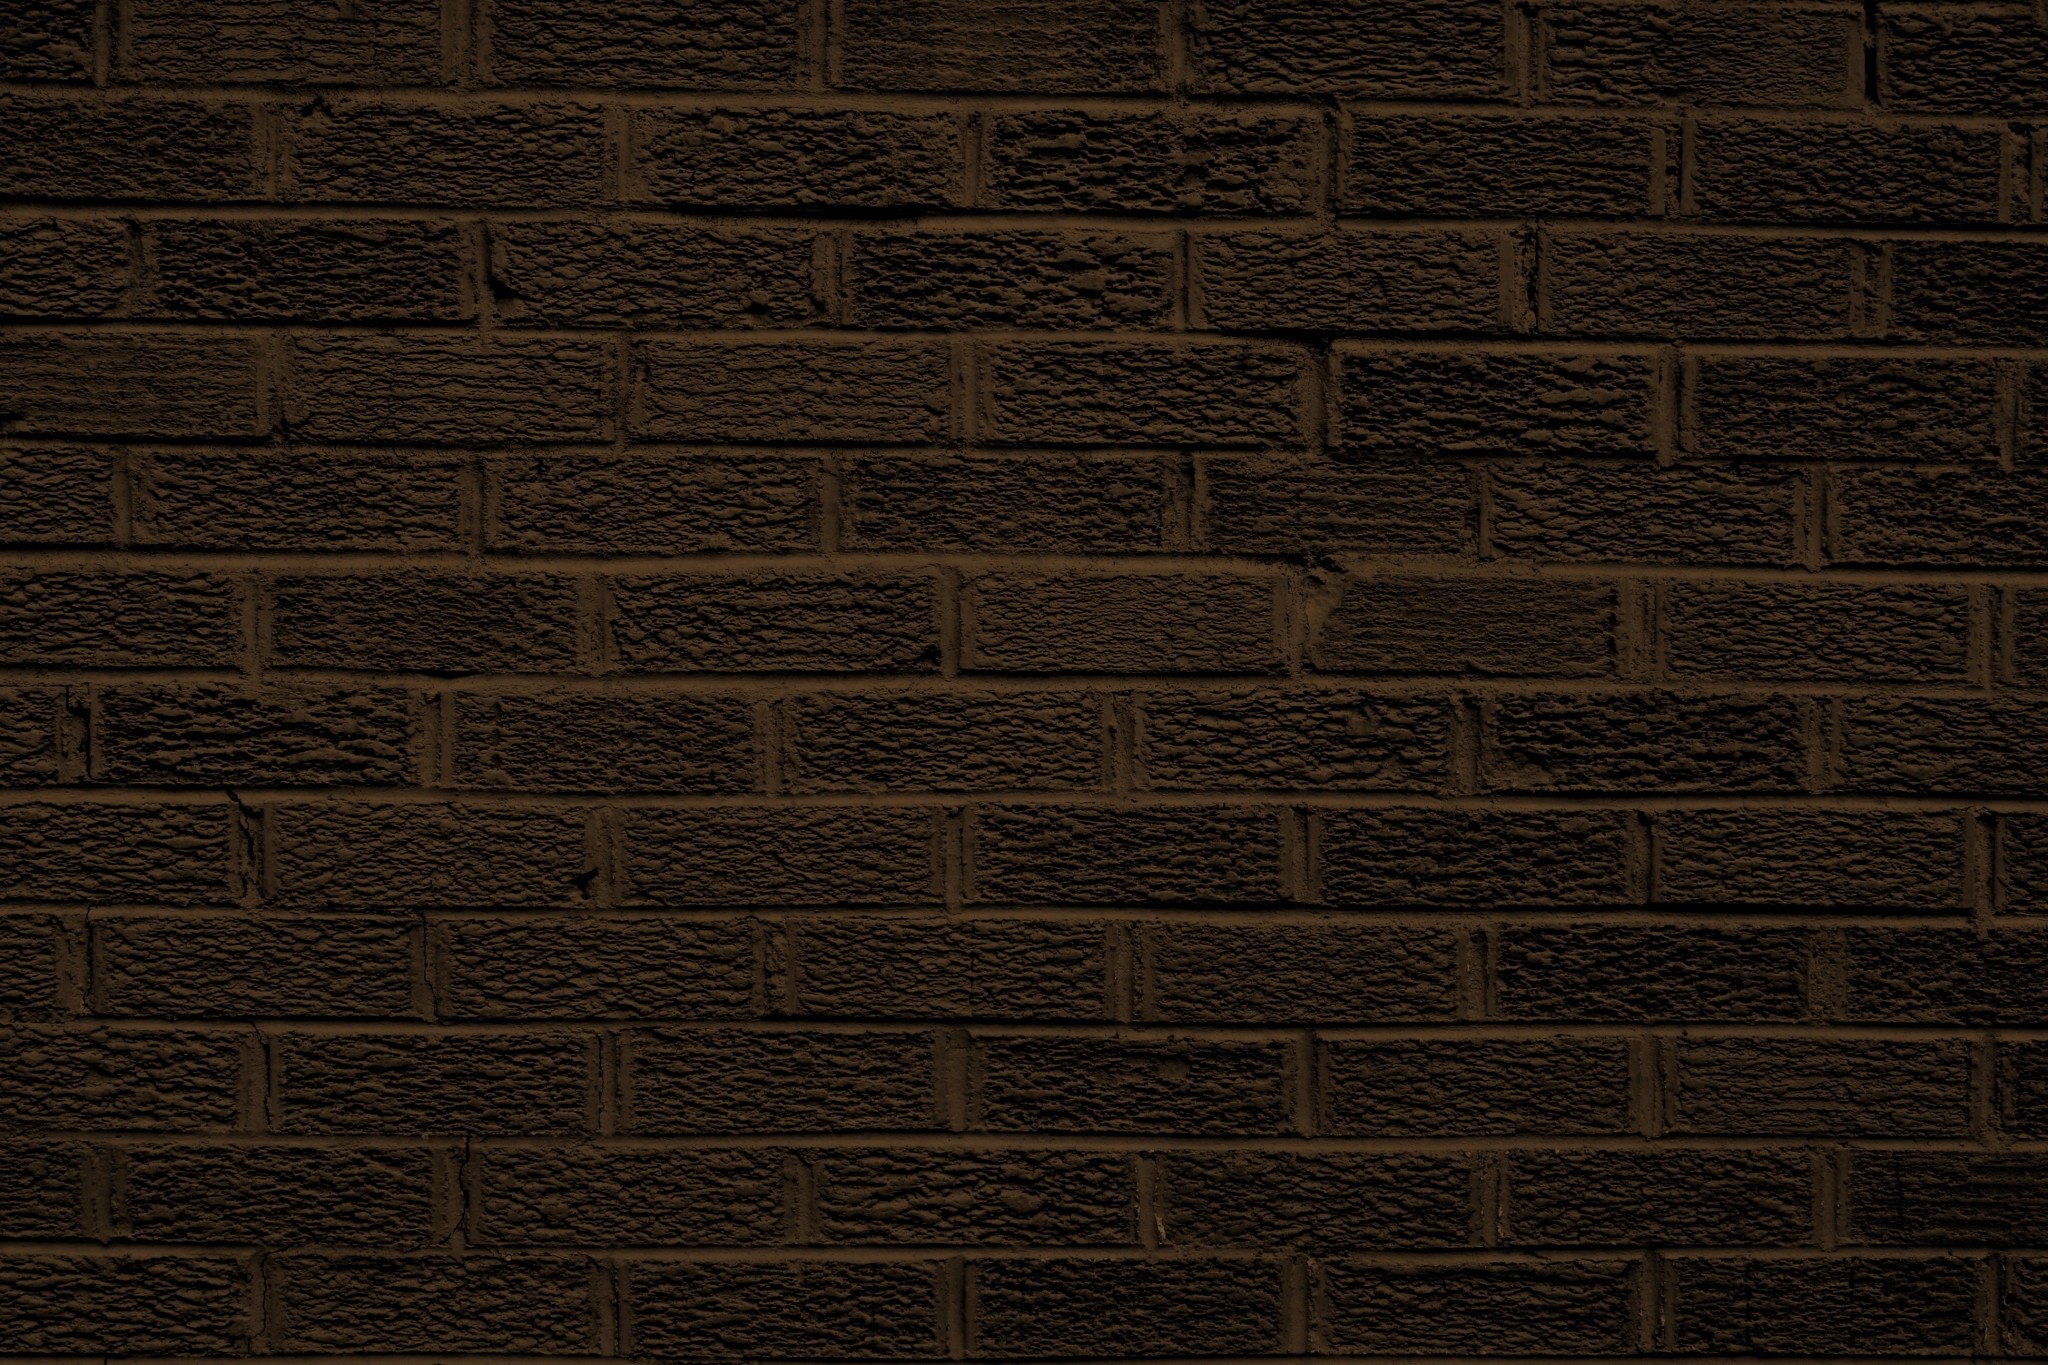 2048x1365 brick windows backgrounds